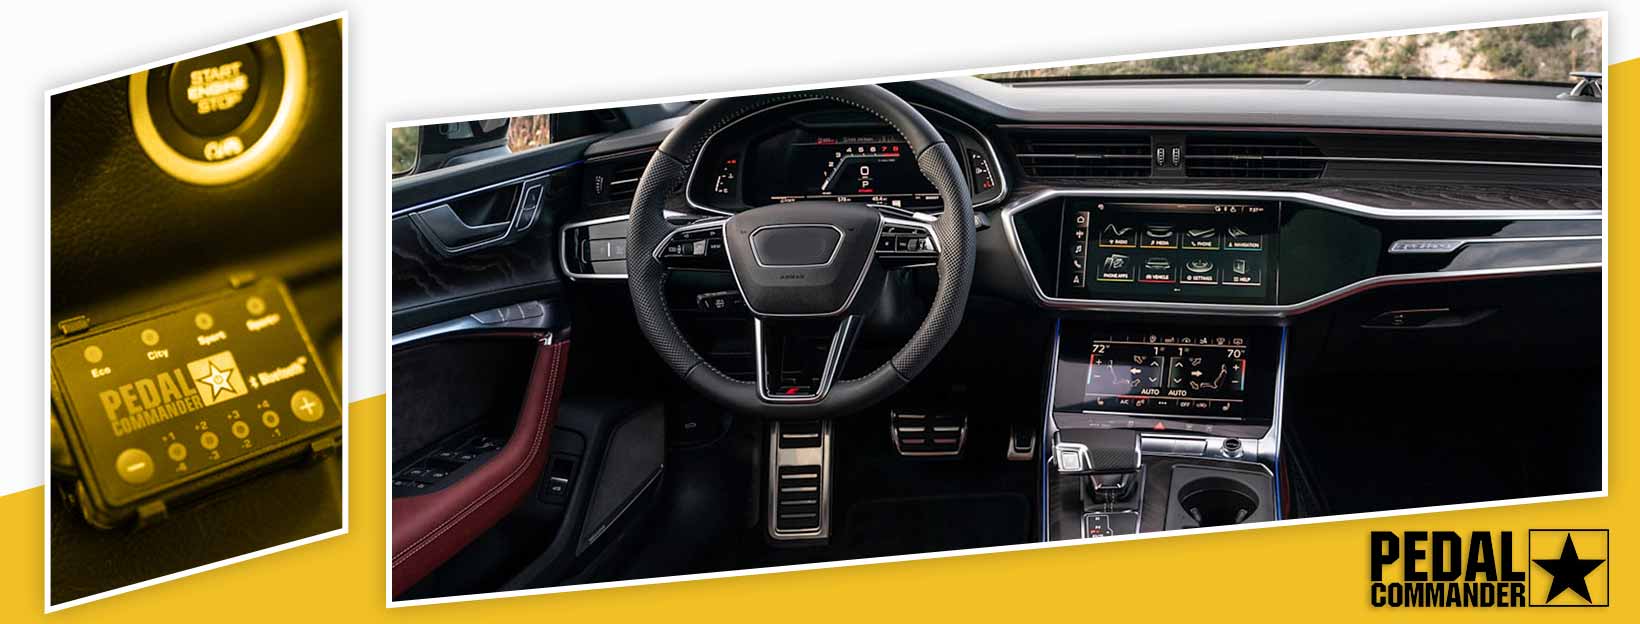 Pedal Commander for Audi S6 - interior